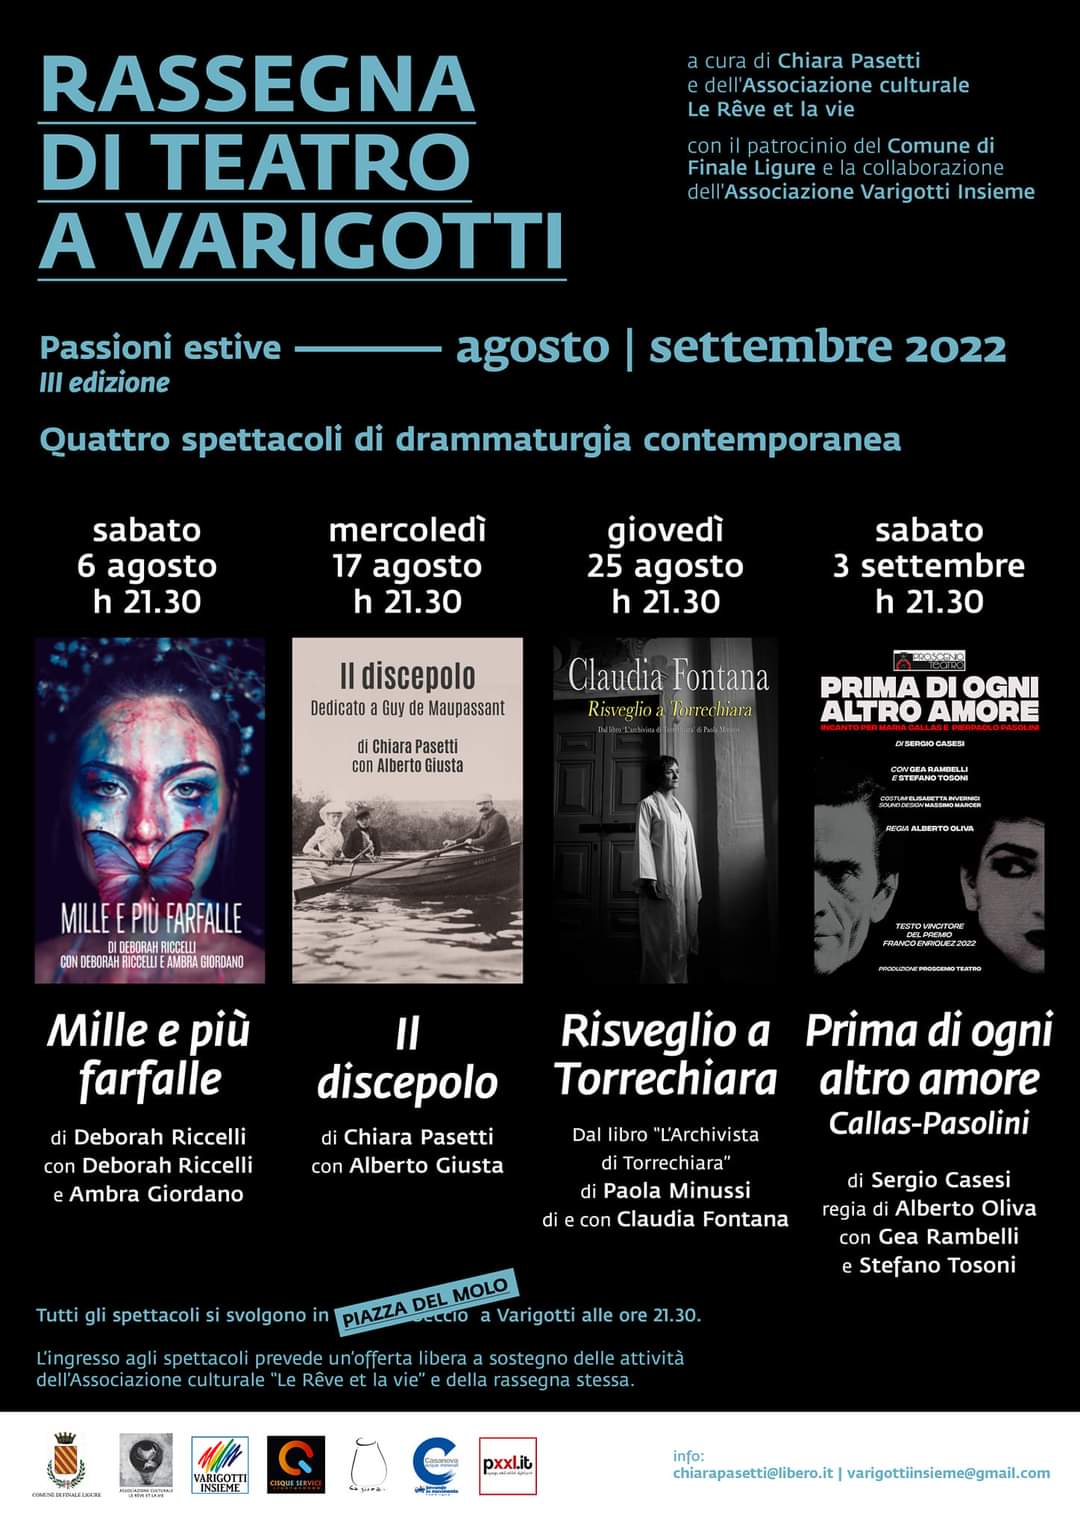 Passioni estive, Varigotti, Paola Minussi, L'archivista di Torrechiara